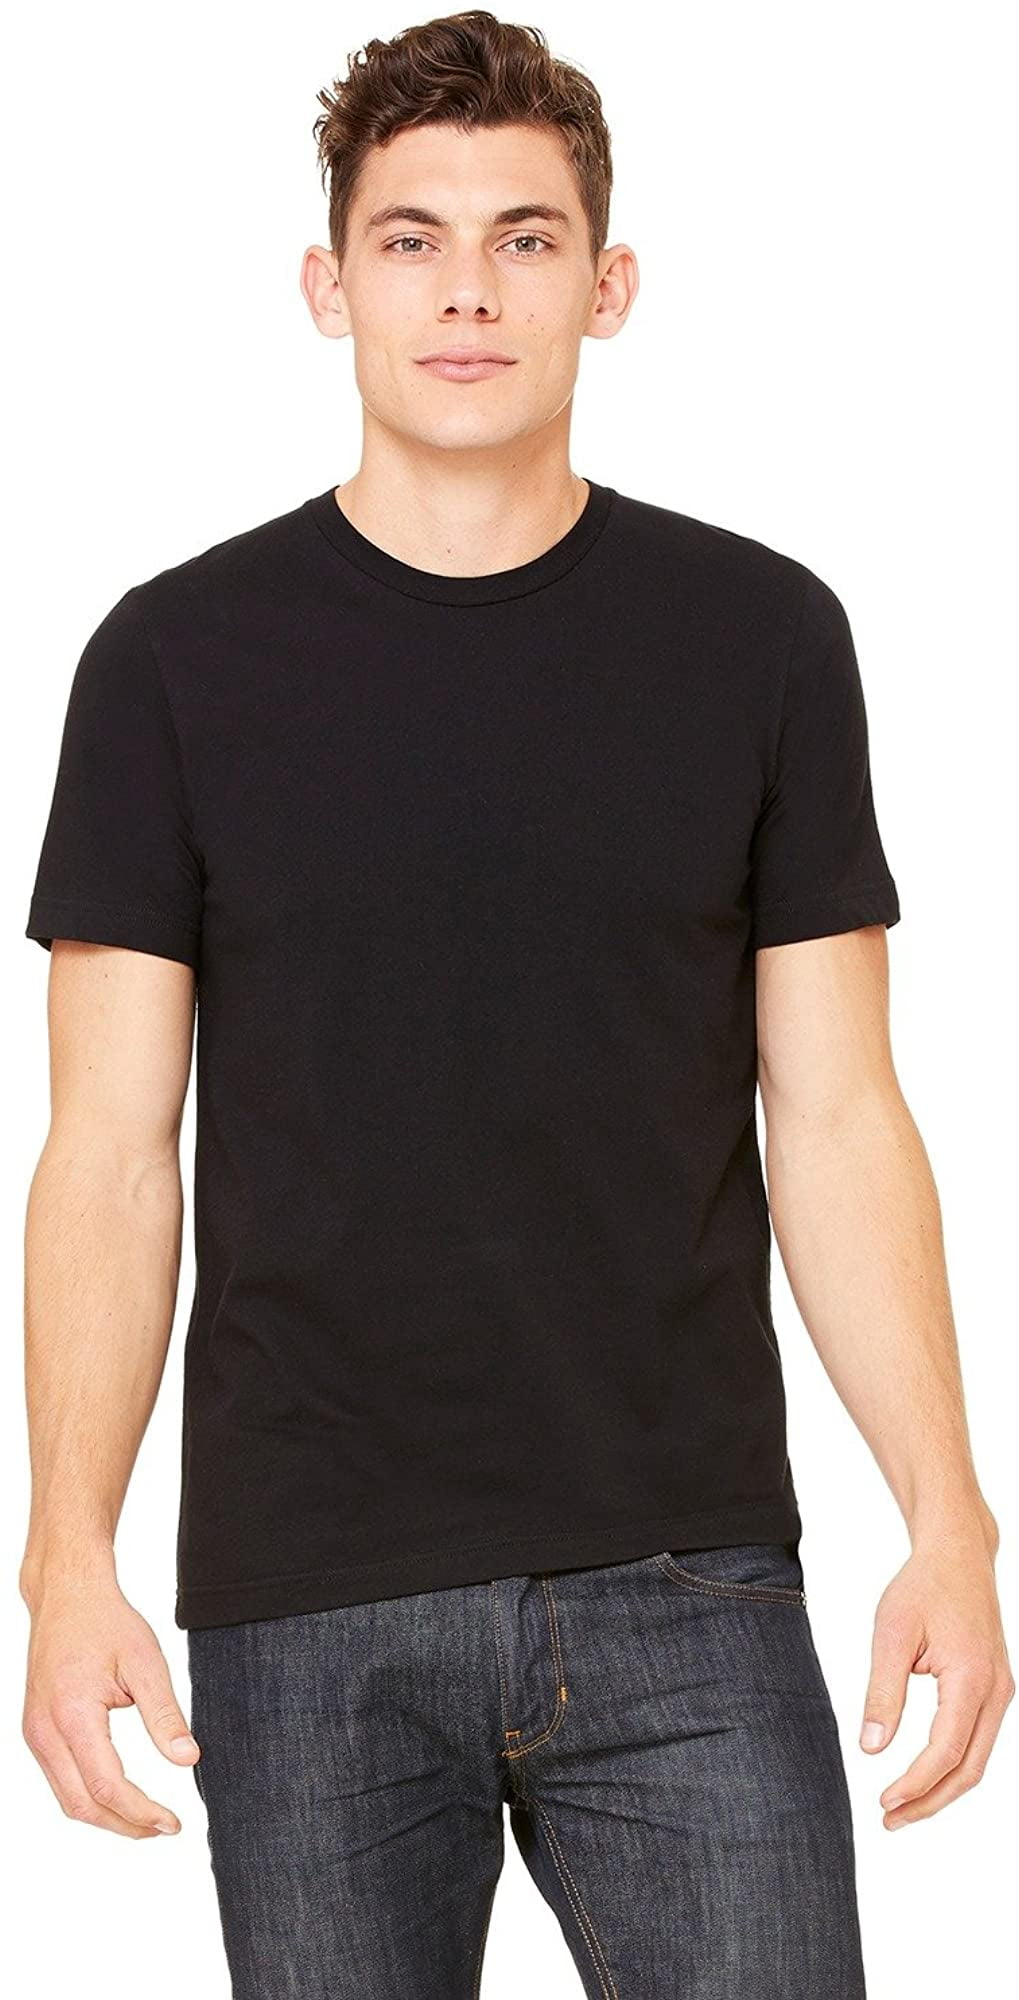 Bella Canvas Unisex Jersey Short-Sleeve T-Shirt Style # 3001C - Original Label 